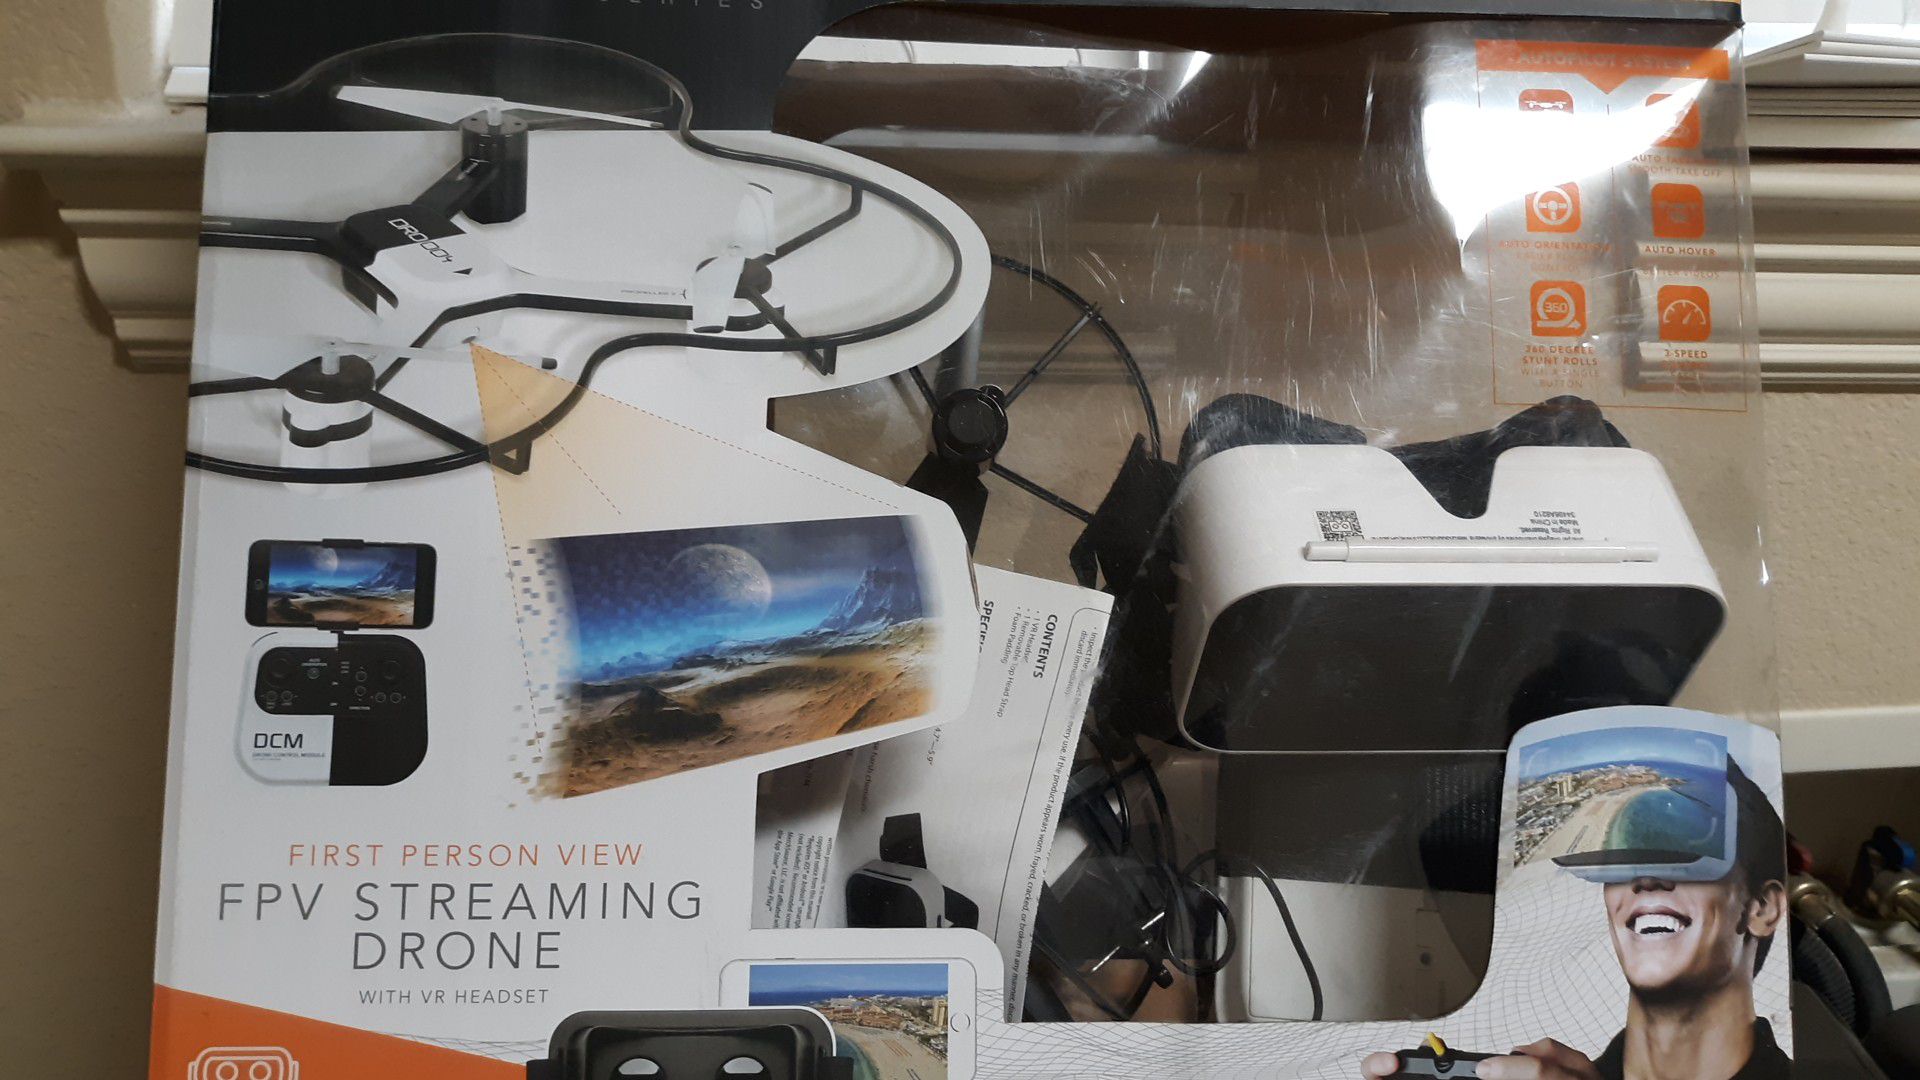 HD Video Streaming Drone NEW Sharper Image Platinum Series VR Headset FPV